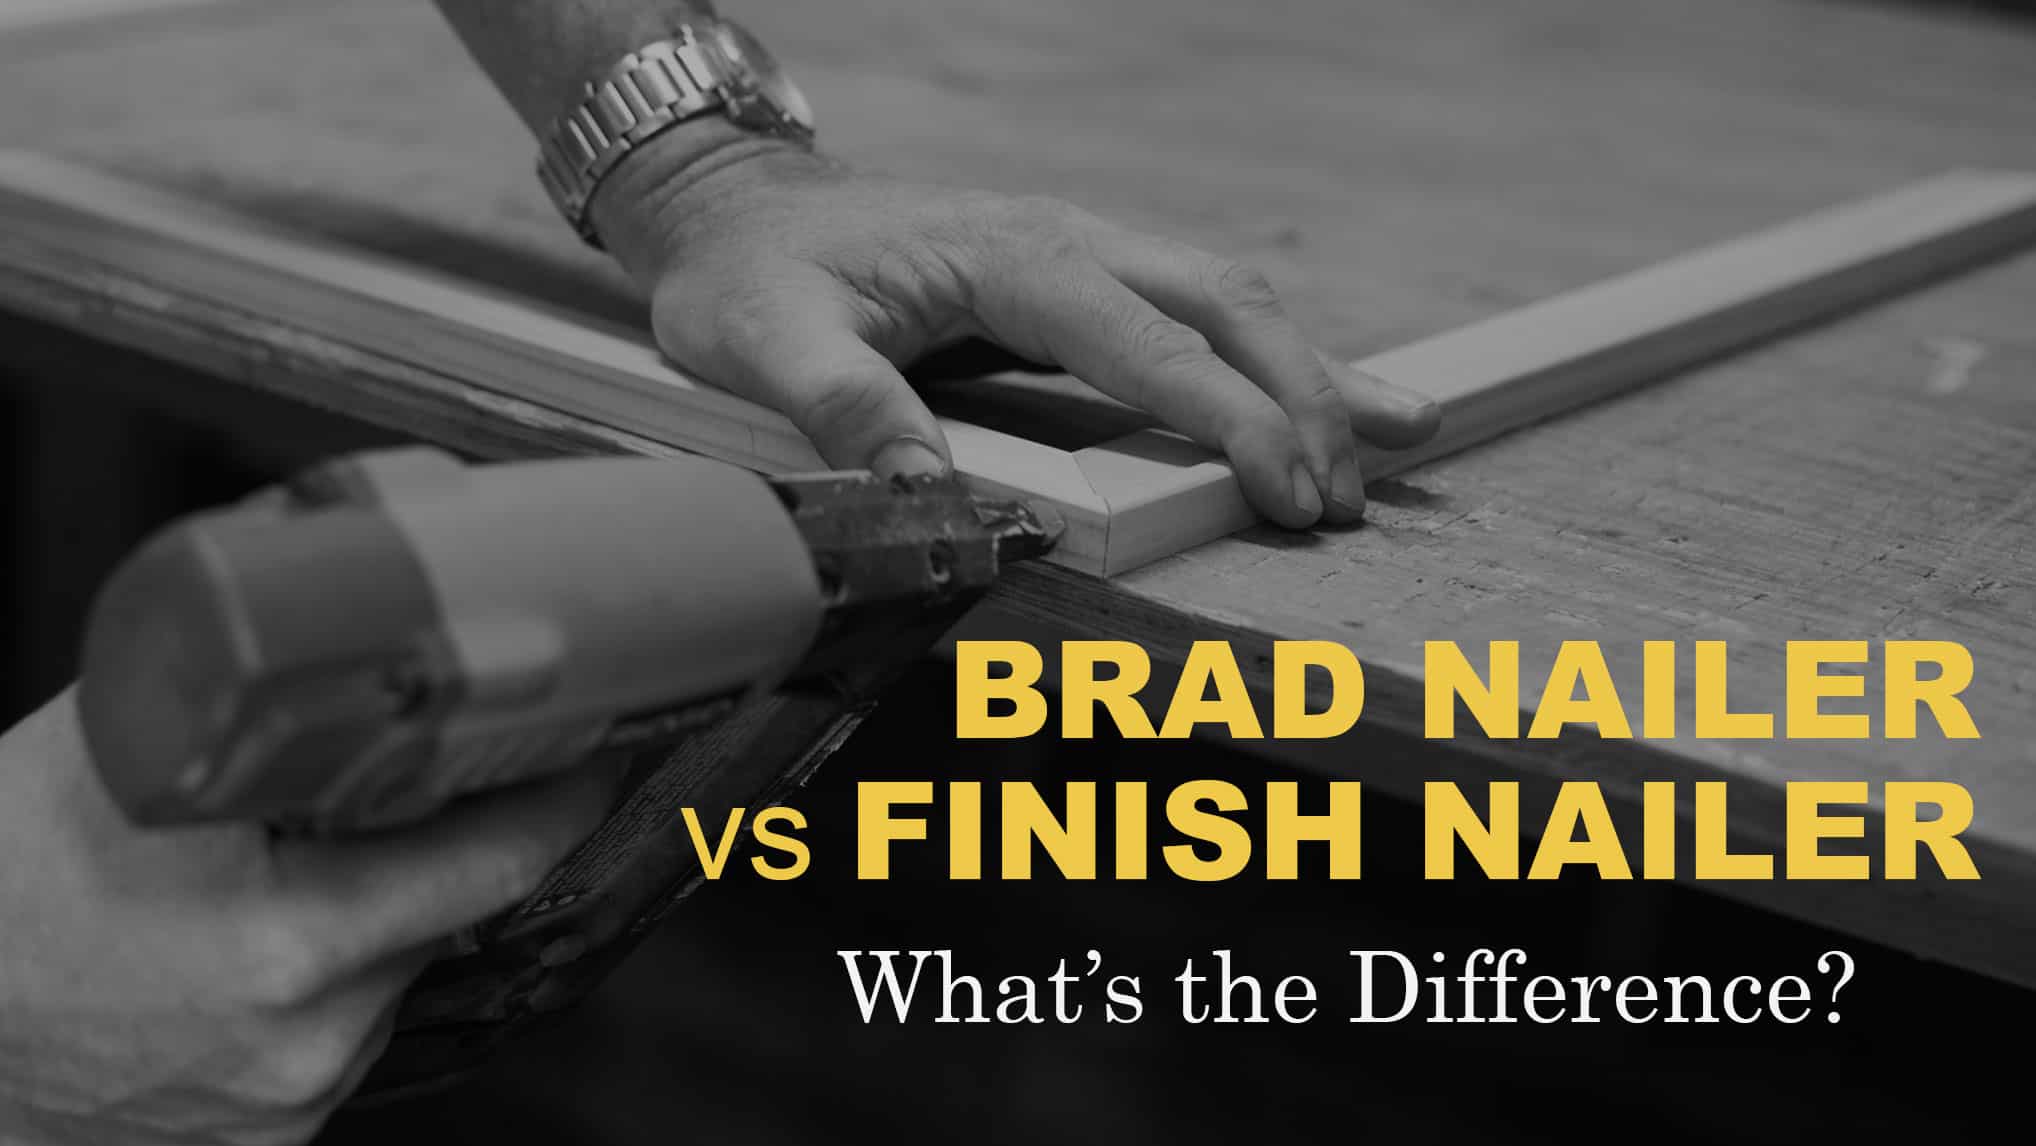 Can I Use Finish Nails in a Brad Nailer 